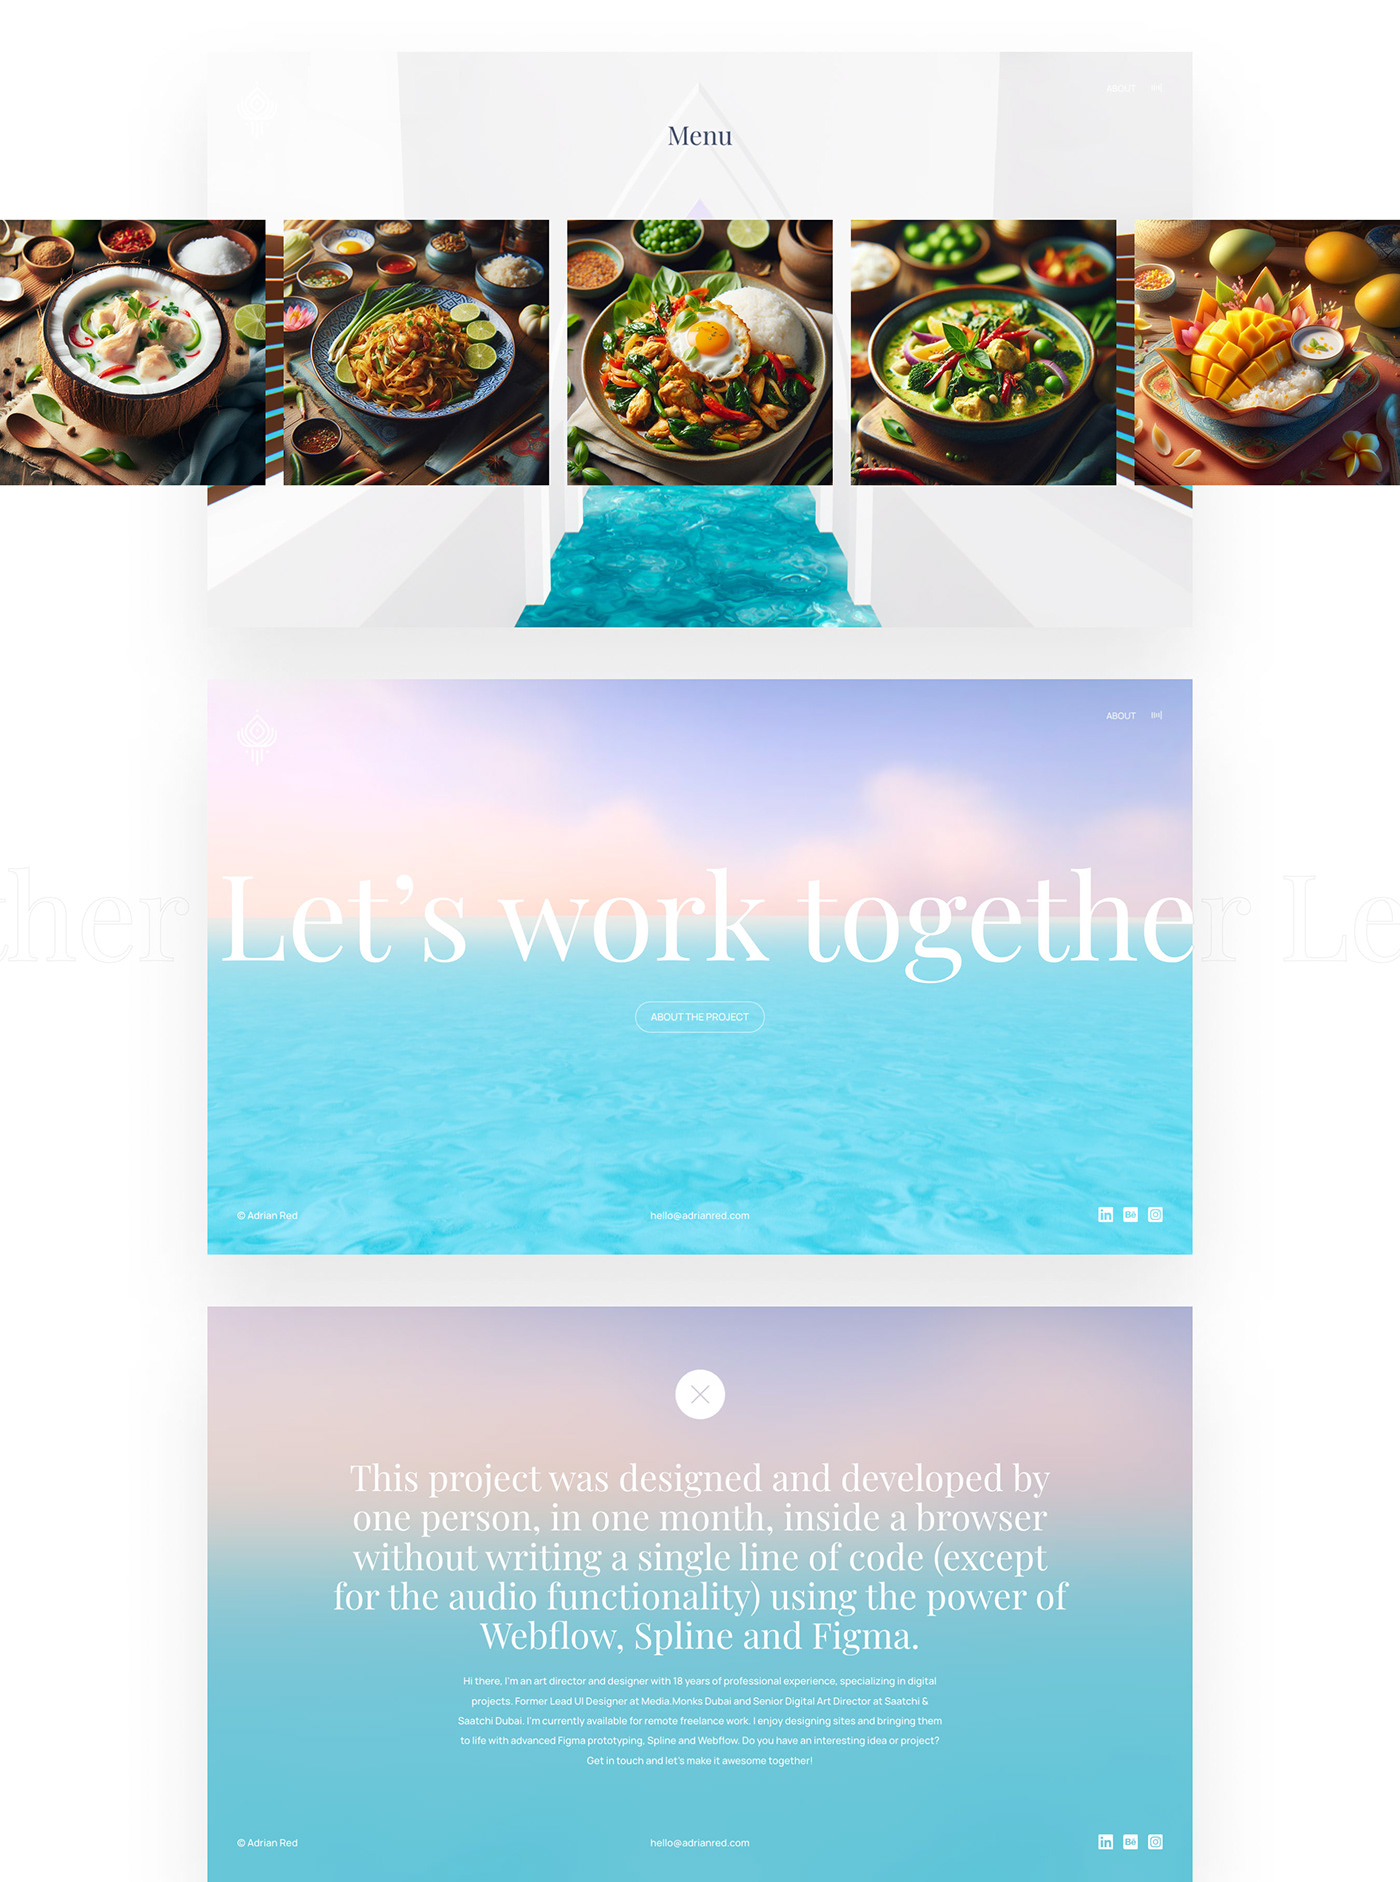 spline Webflow Figma Website 3D immersive Maldives Thai restaurant luxury